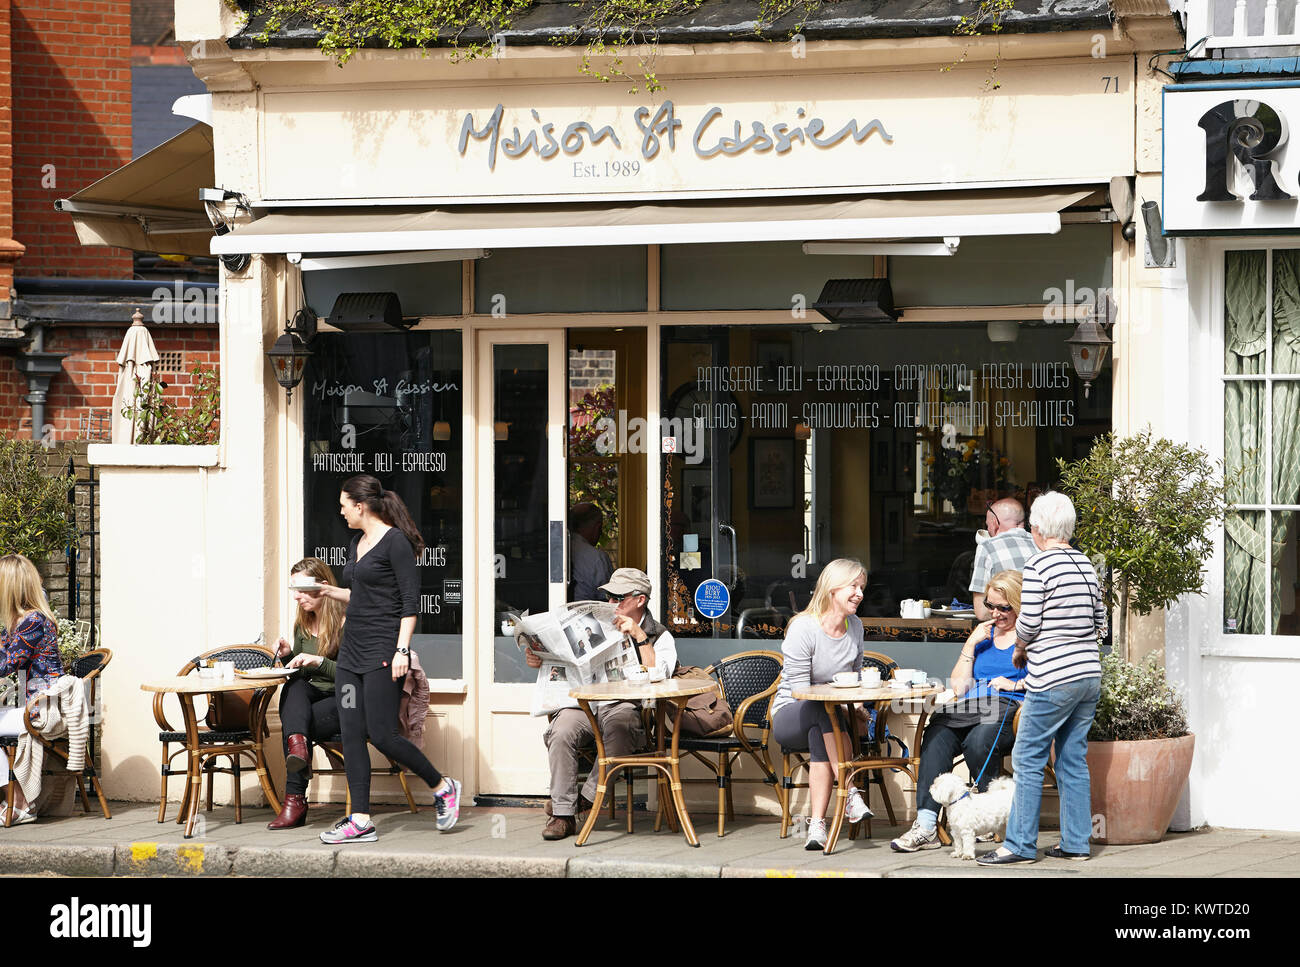 Maison St Cassien Restaurant, Wimbledon Village, London, UK Stock Photo